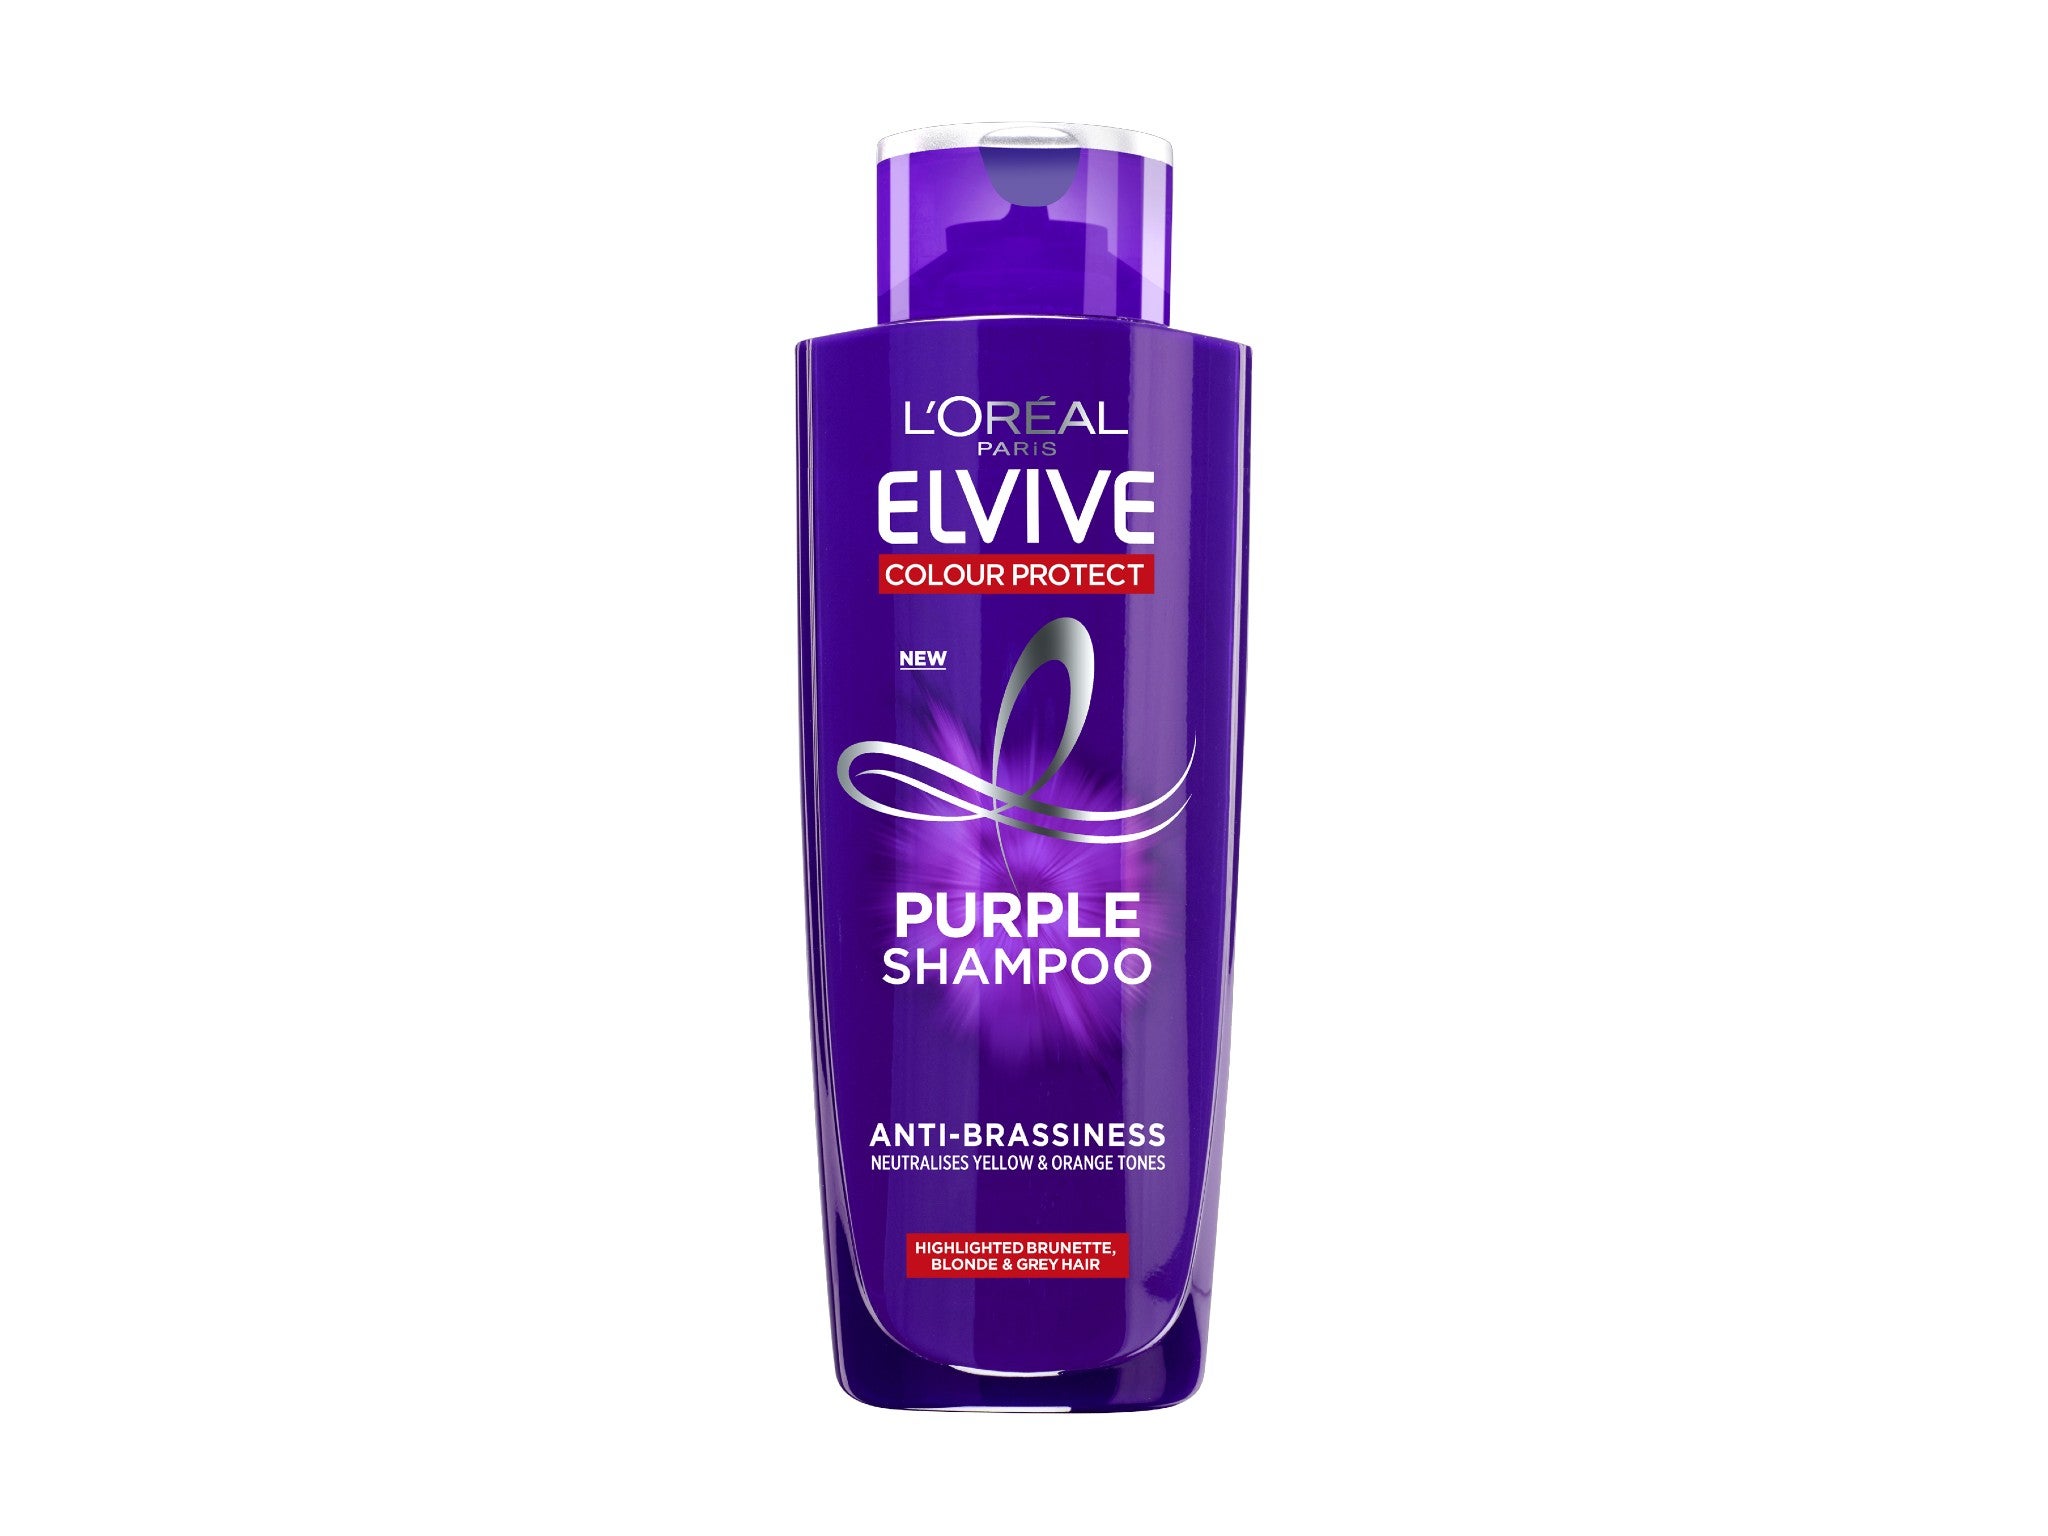 L’Oreal elvive colour protect purple shampoo indybest.jpeg